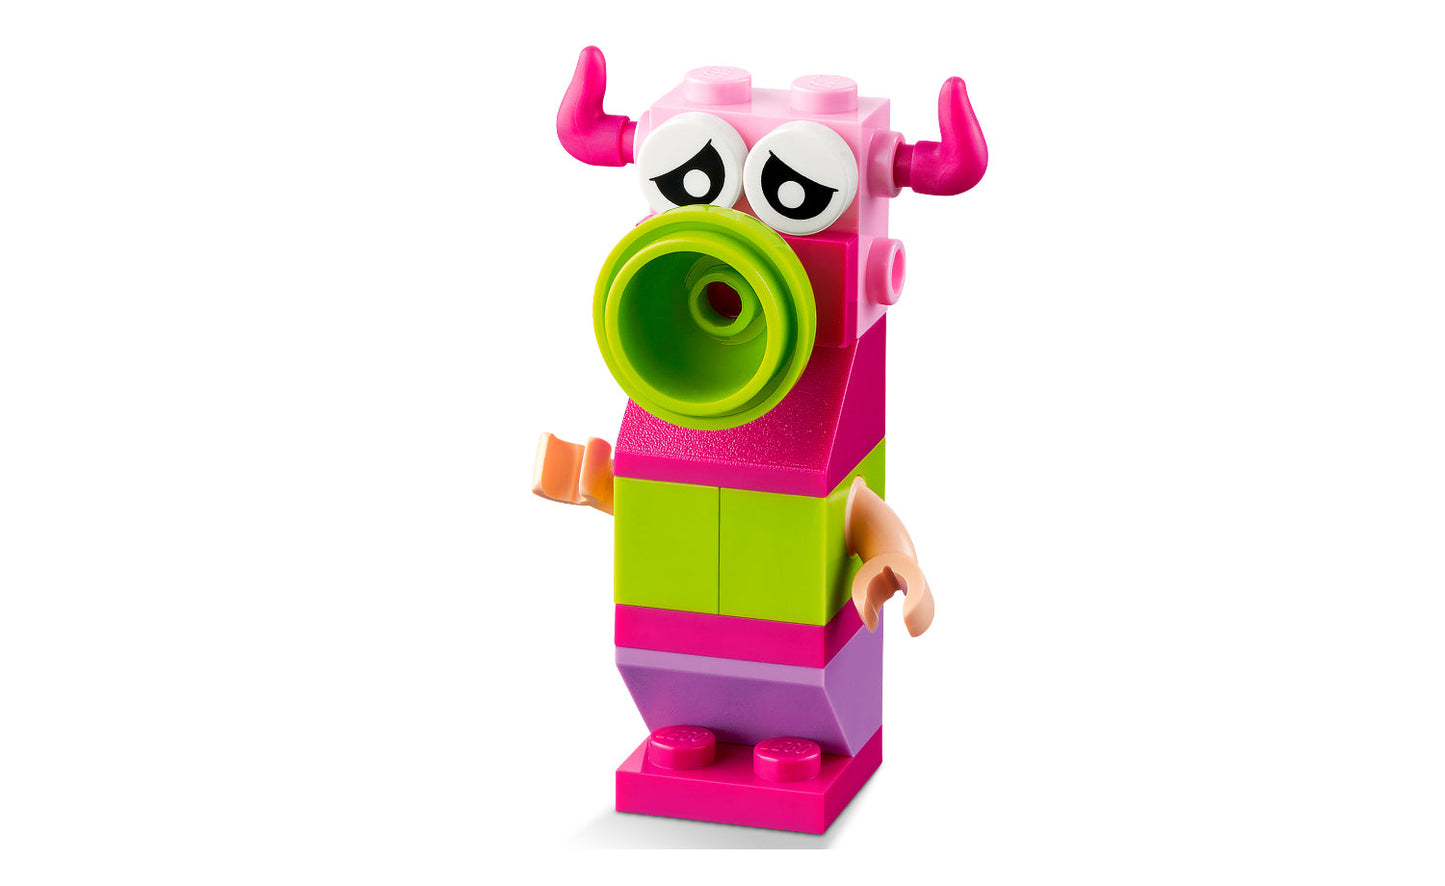 Lego Classic Creative Monsters - 11017